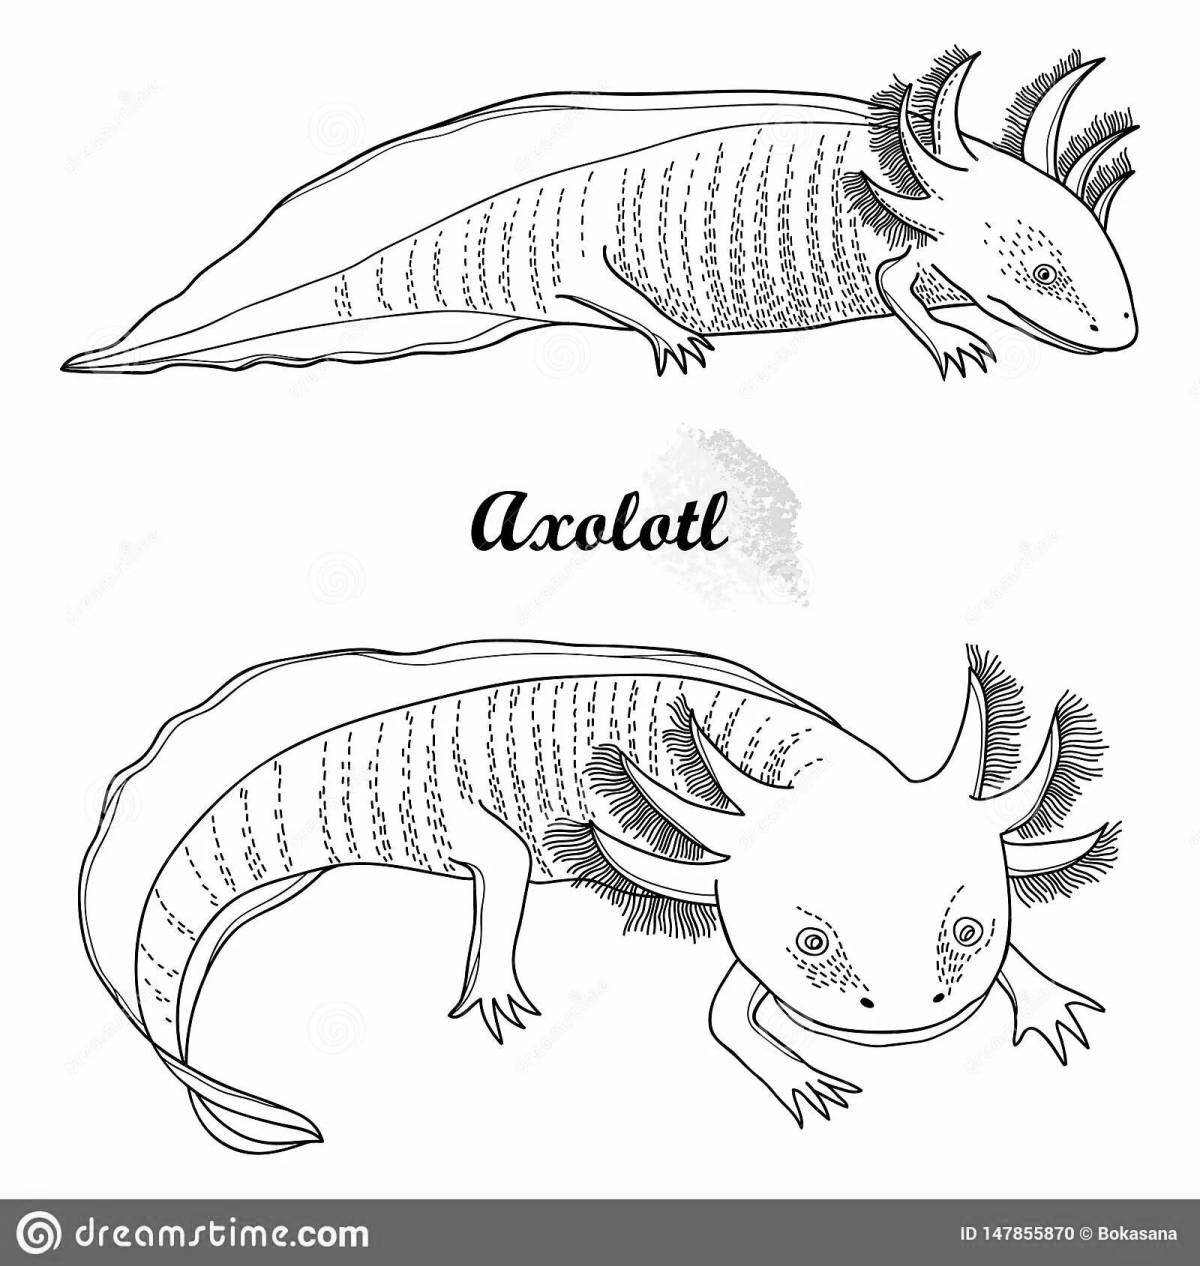 Amazing minecraft axolotl coloring book